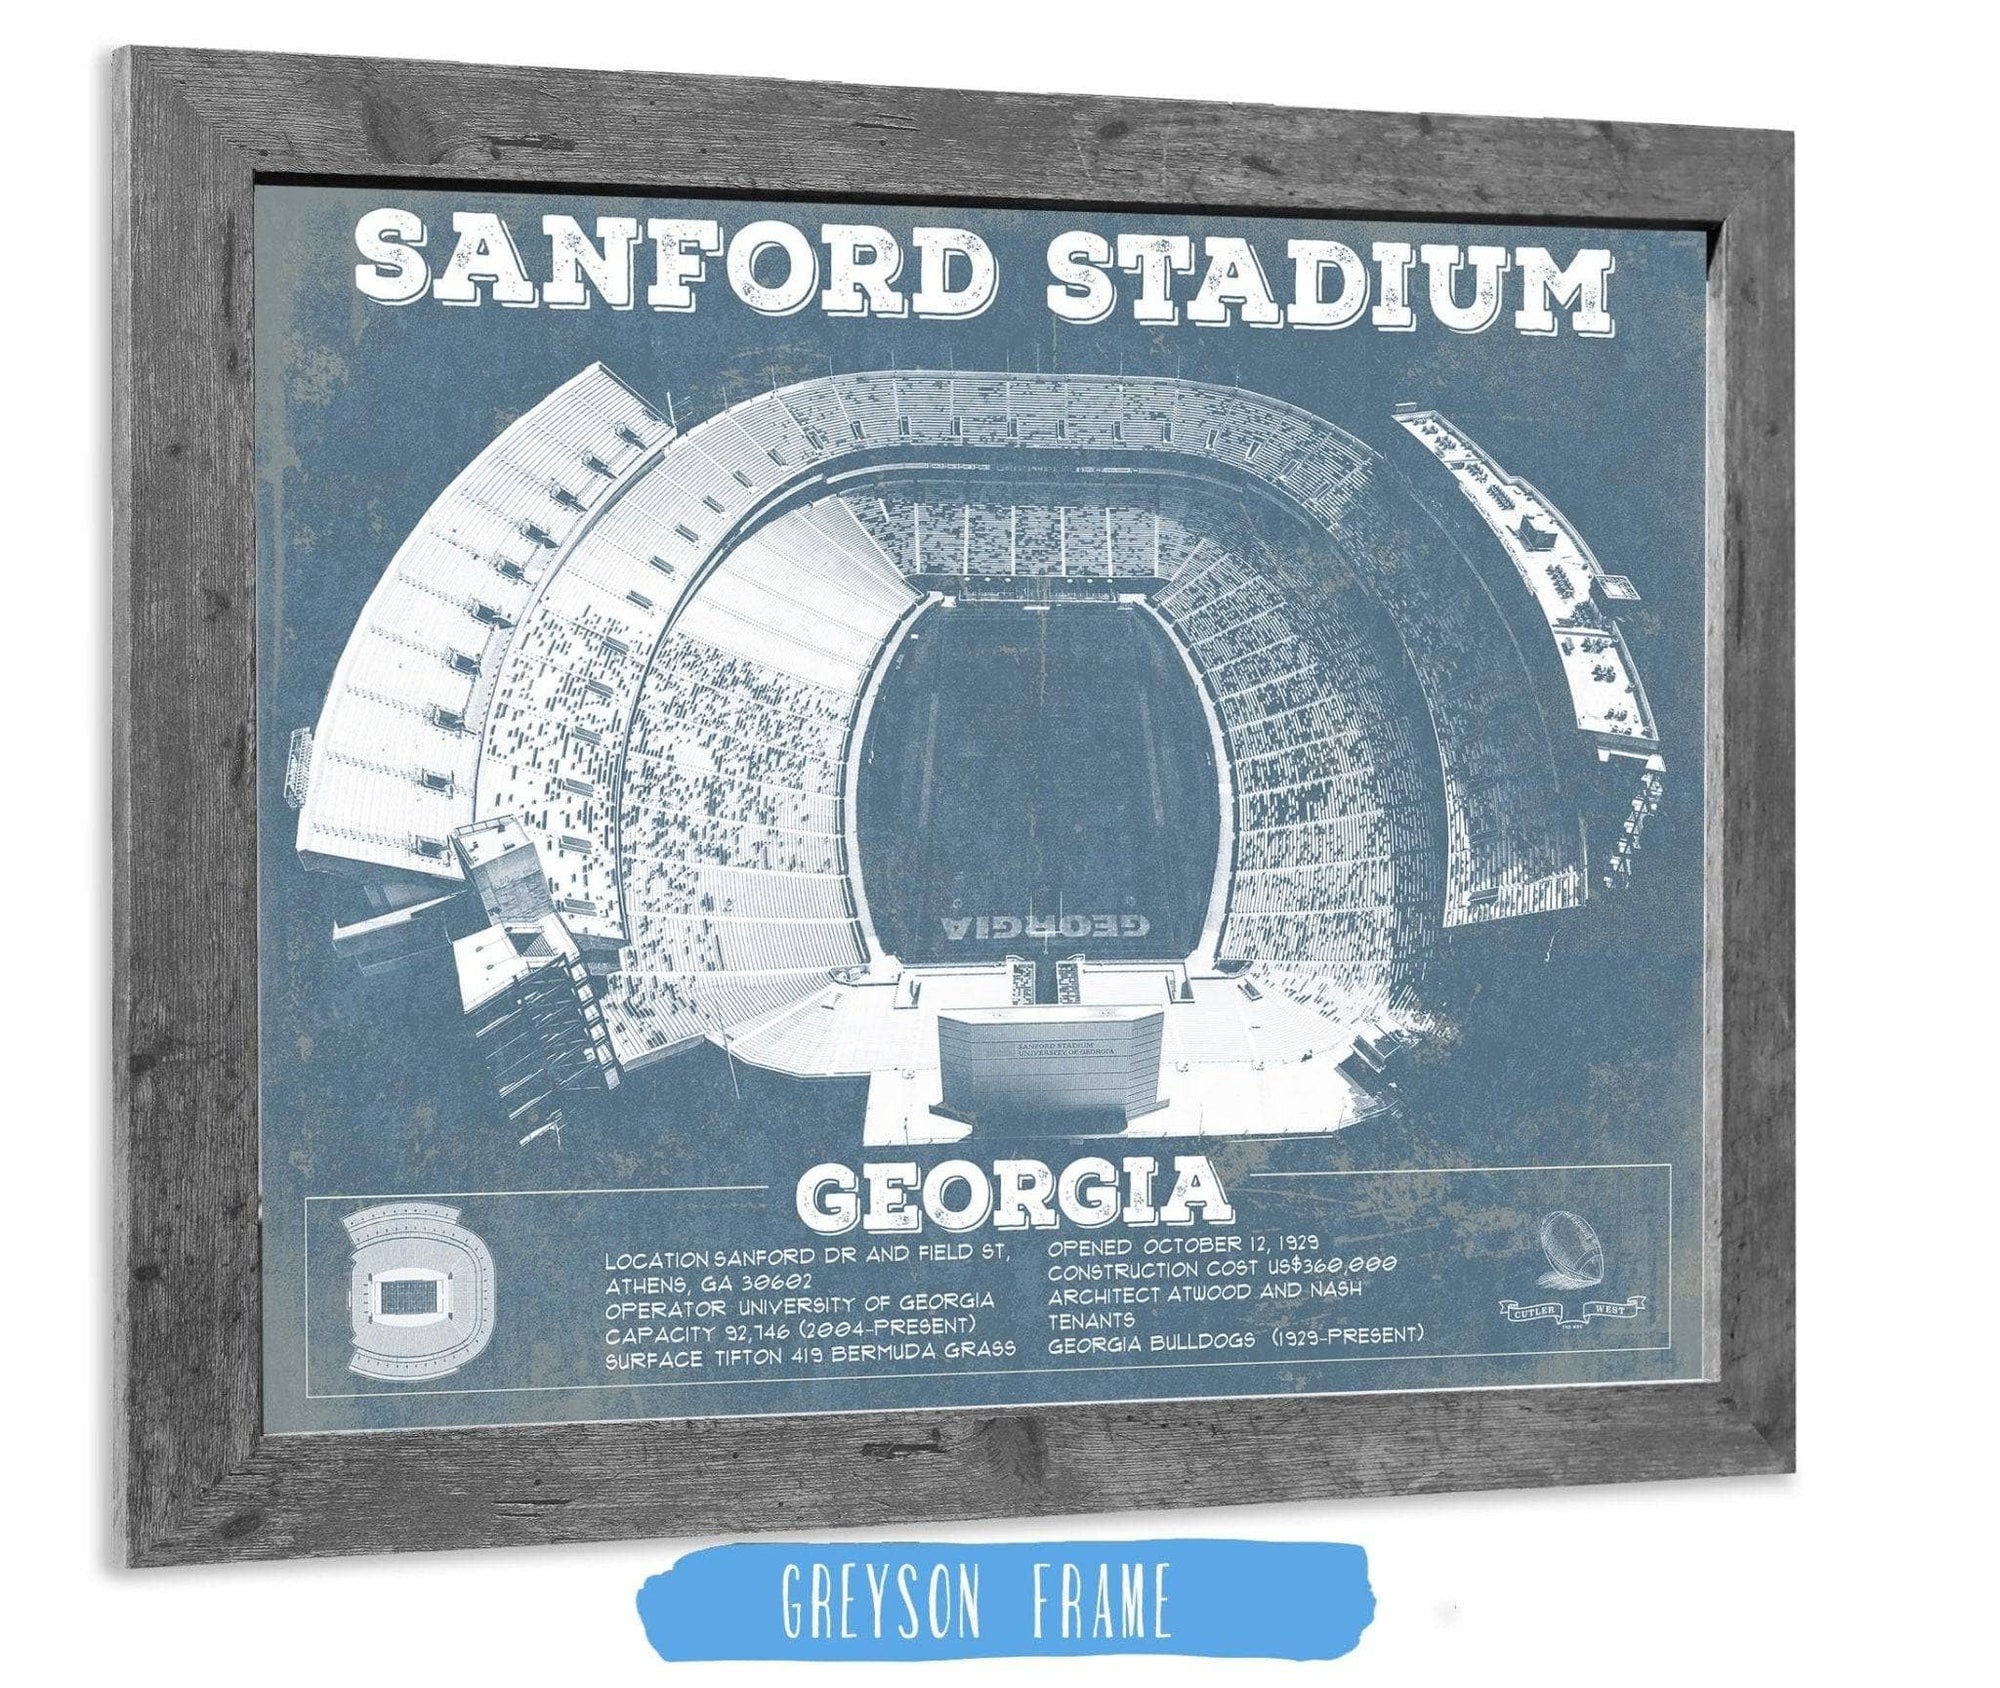 Cutler West College Football Collection Georgia Bulldogs Football - Sanford Stadium Vintage Football Blueprint Art Print